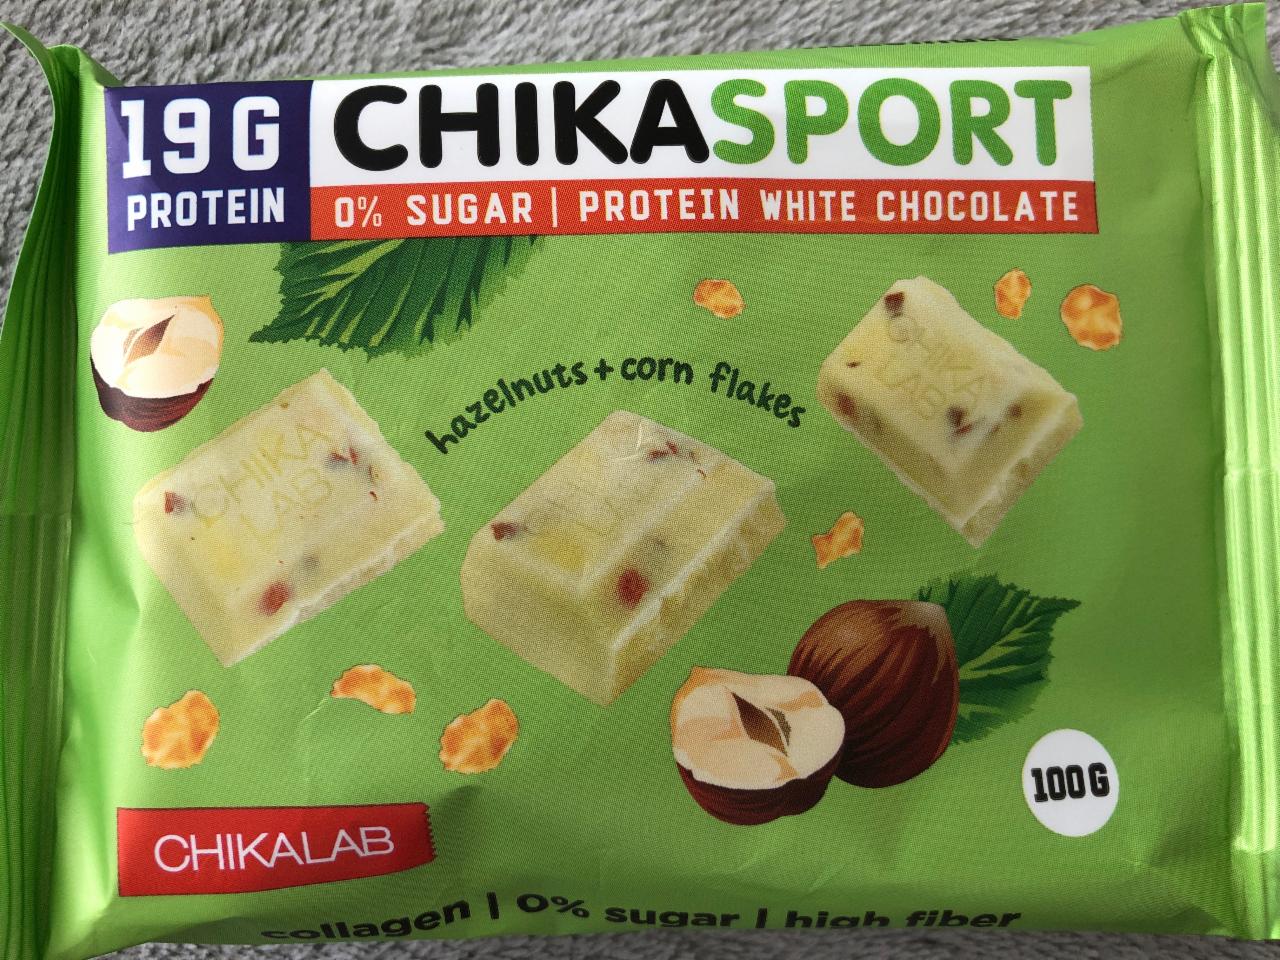 Fotografie - ChikaSport Protein White Chocolate & Hazelnut + corn flakes Chikalab